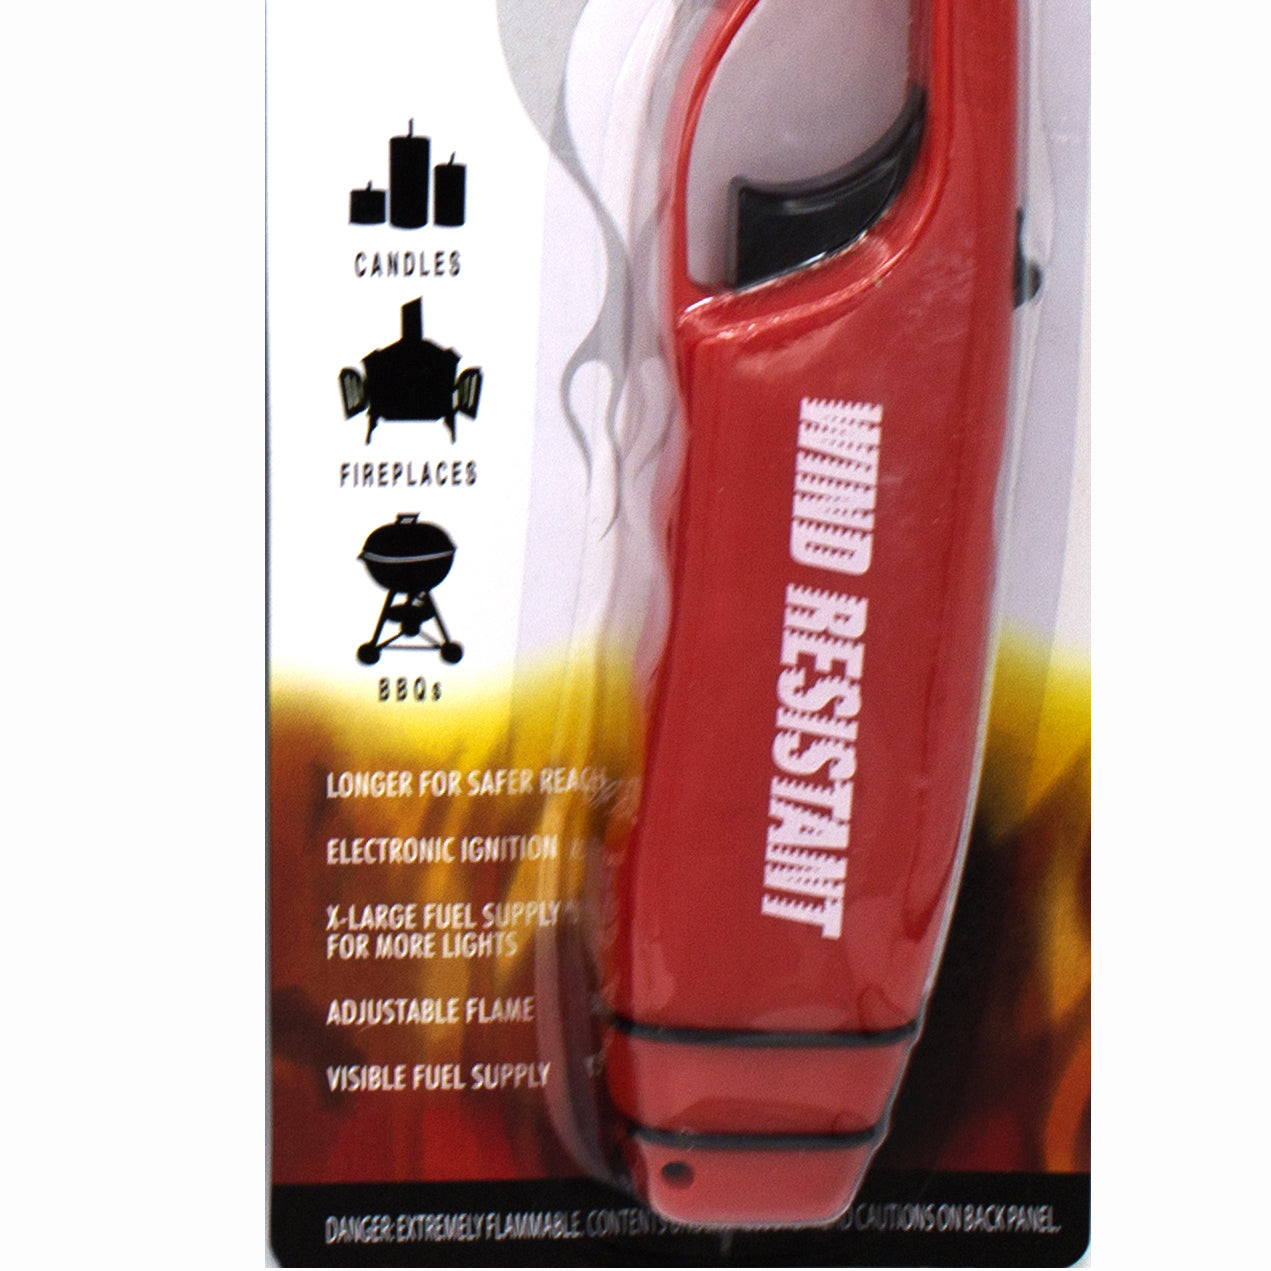 Windproof Multipurpose Utility Lighters - Elite Brands Usa